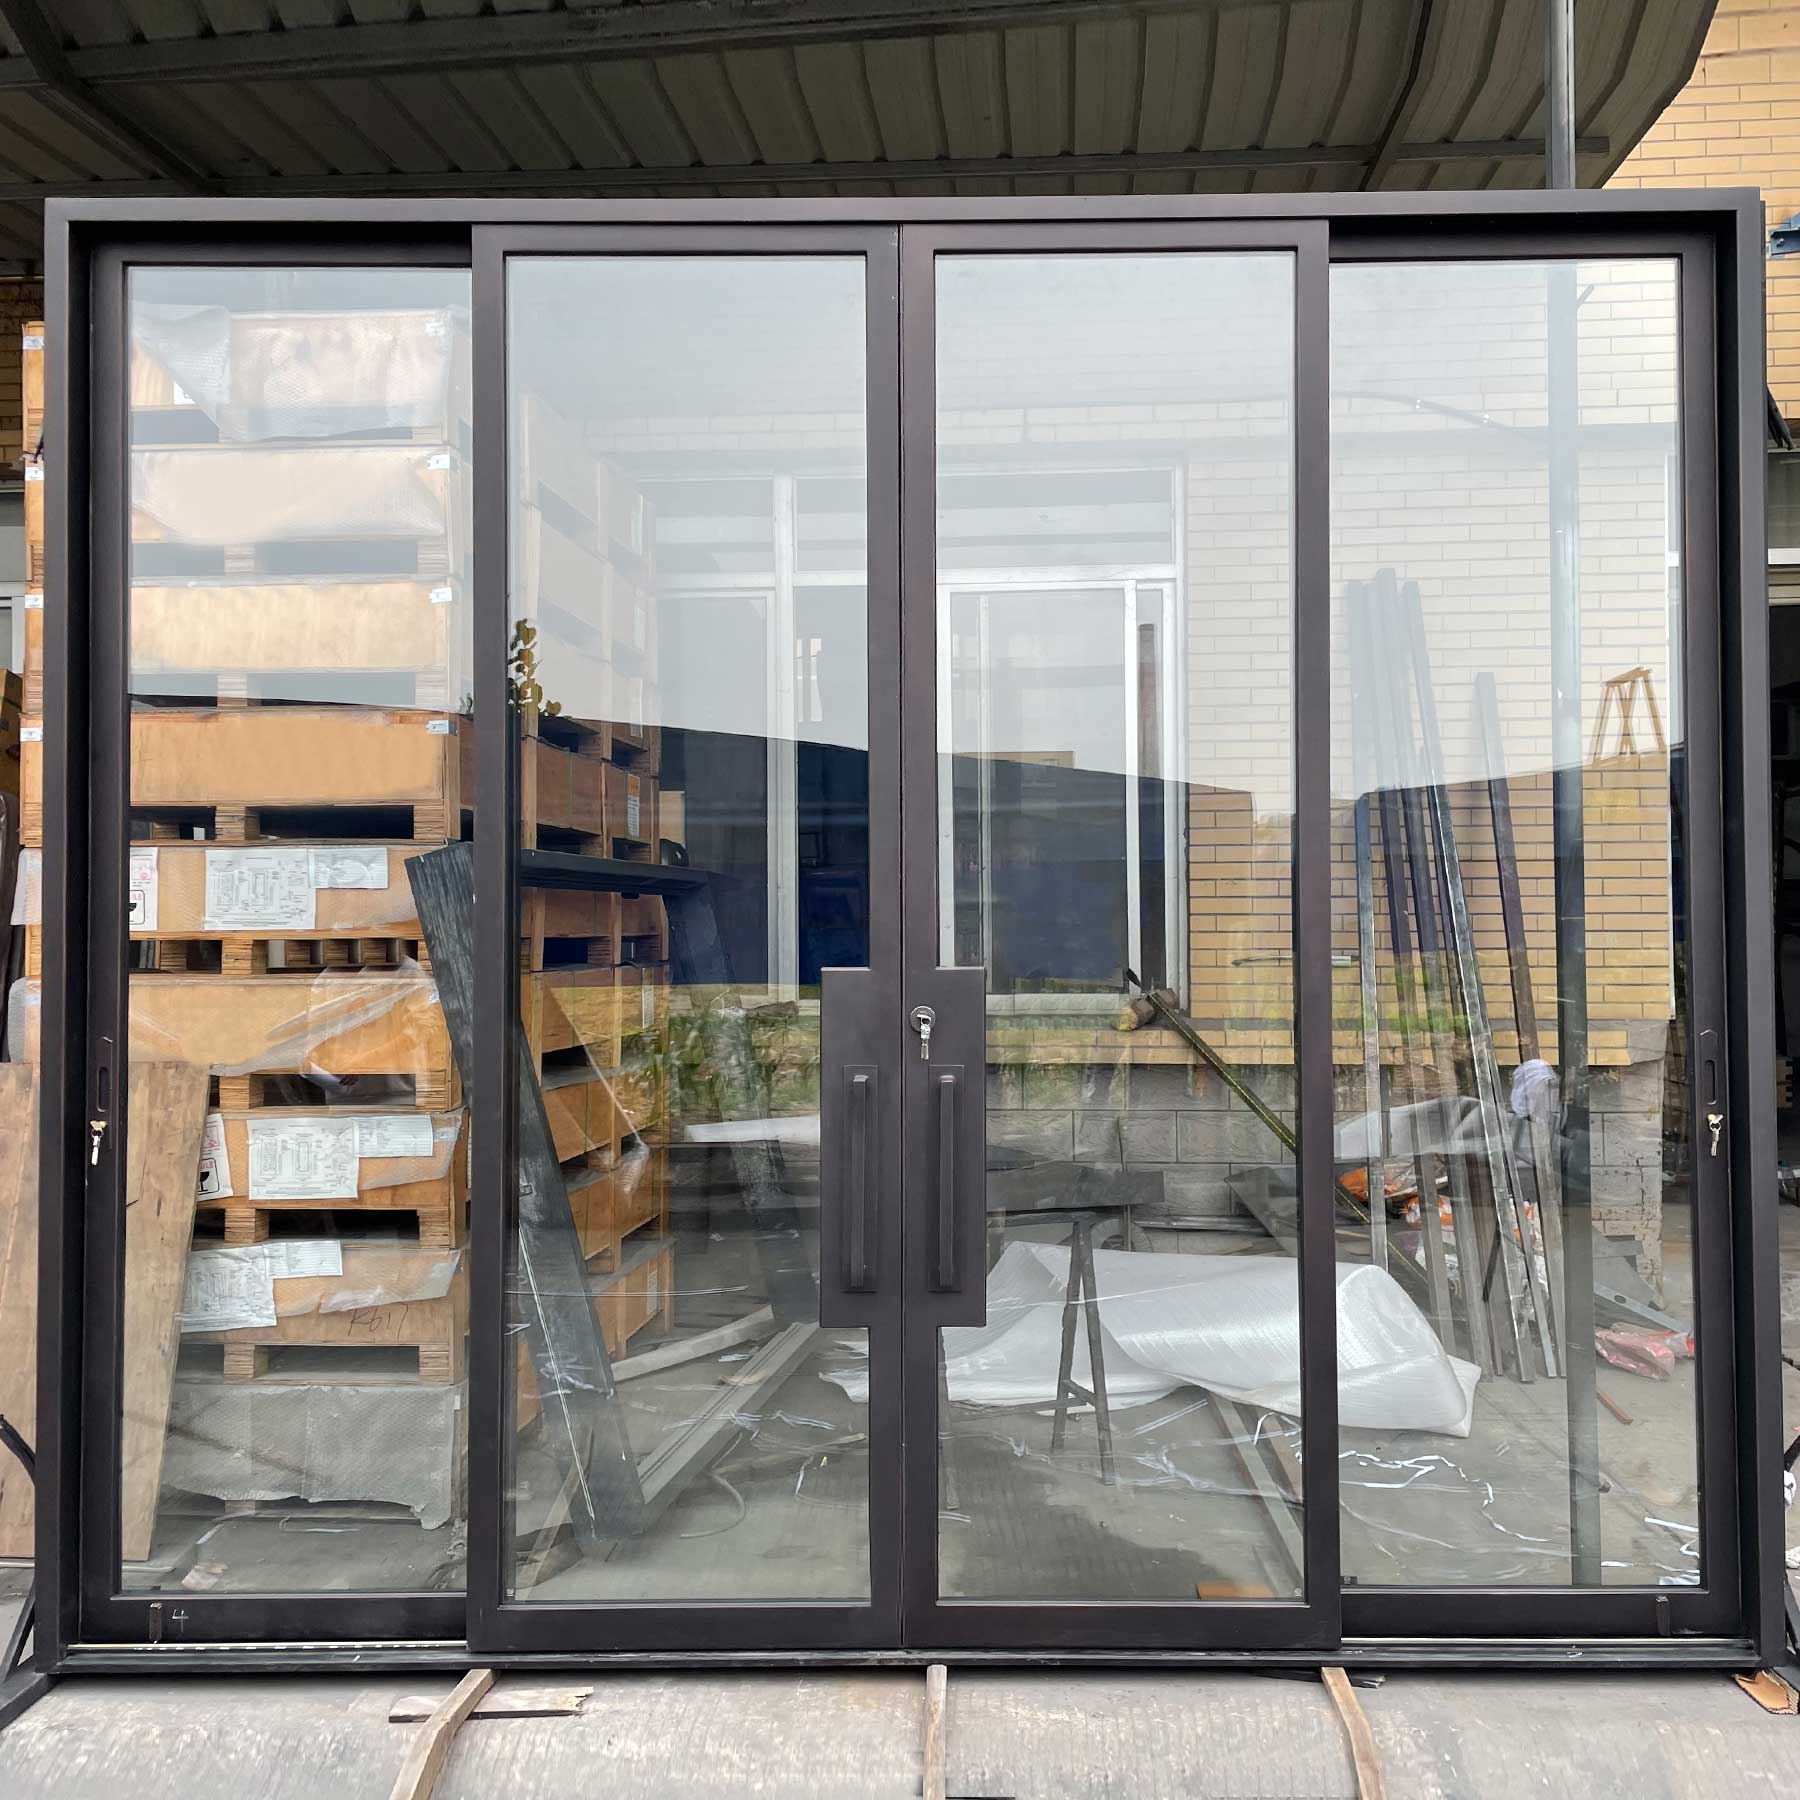 gloryirondoors iron sliding patio doors 4 panels in bronze color